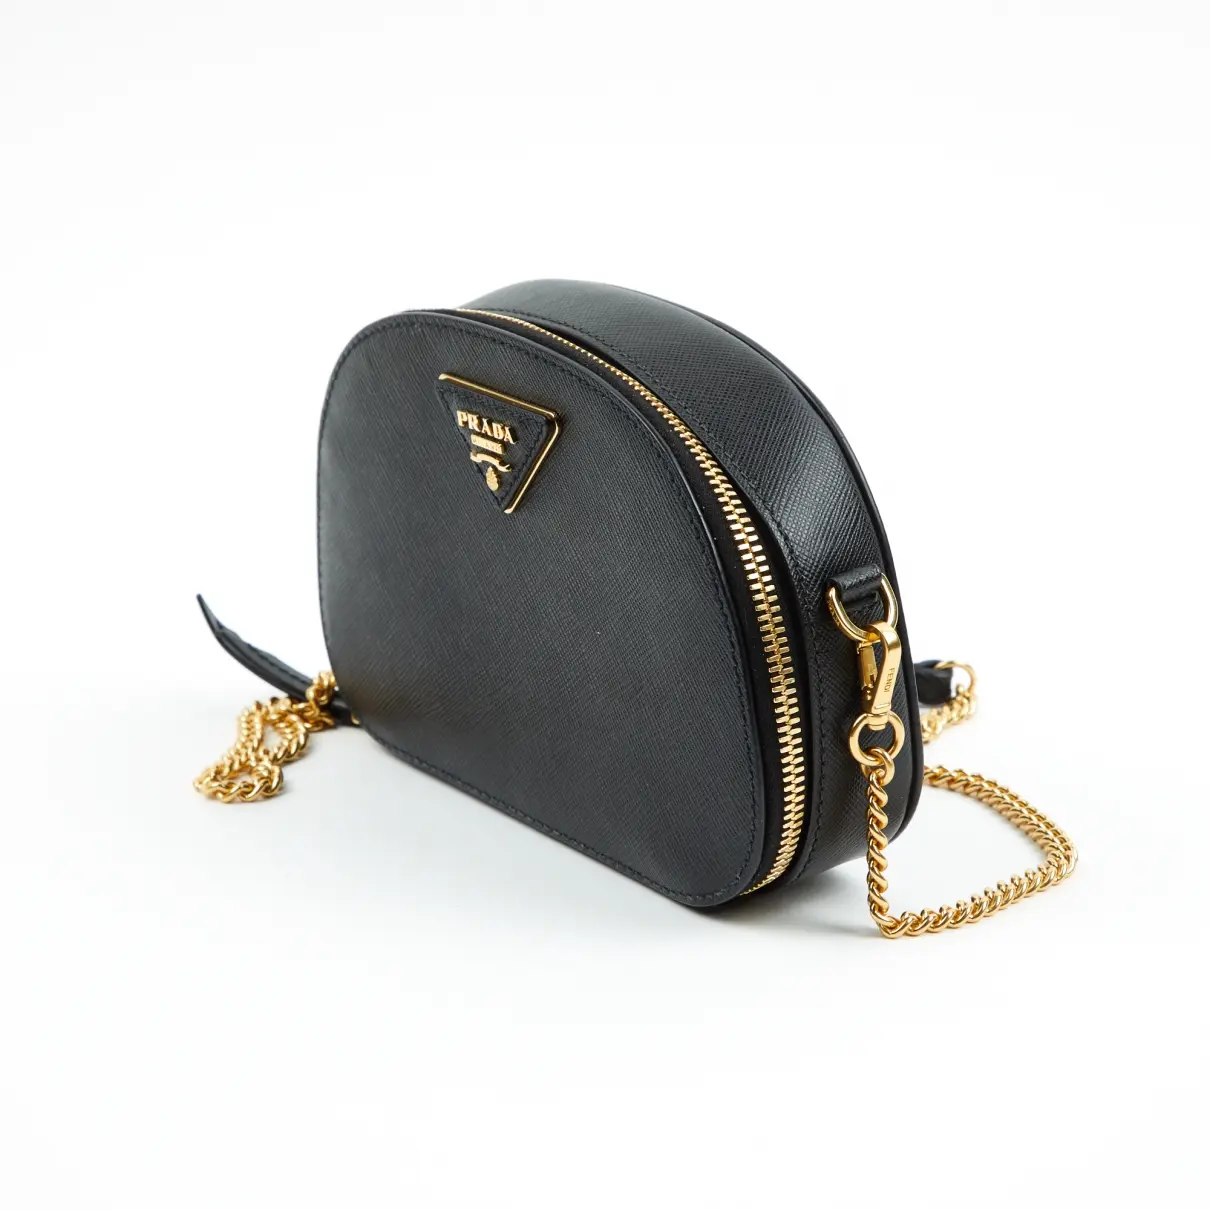 Buy Prada Odette leather crossbody bag online